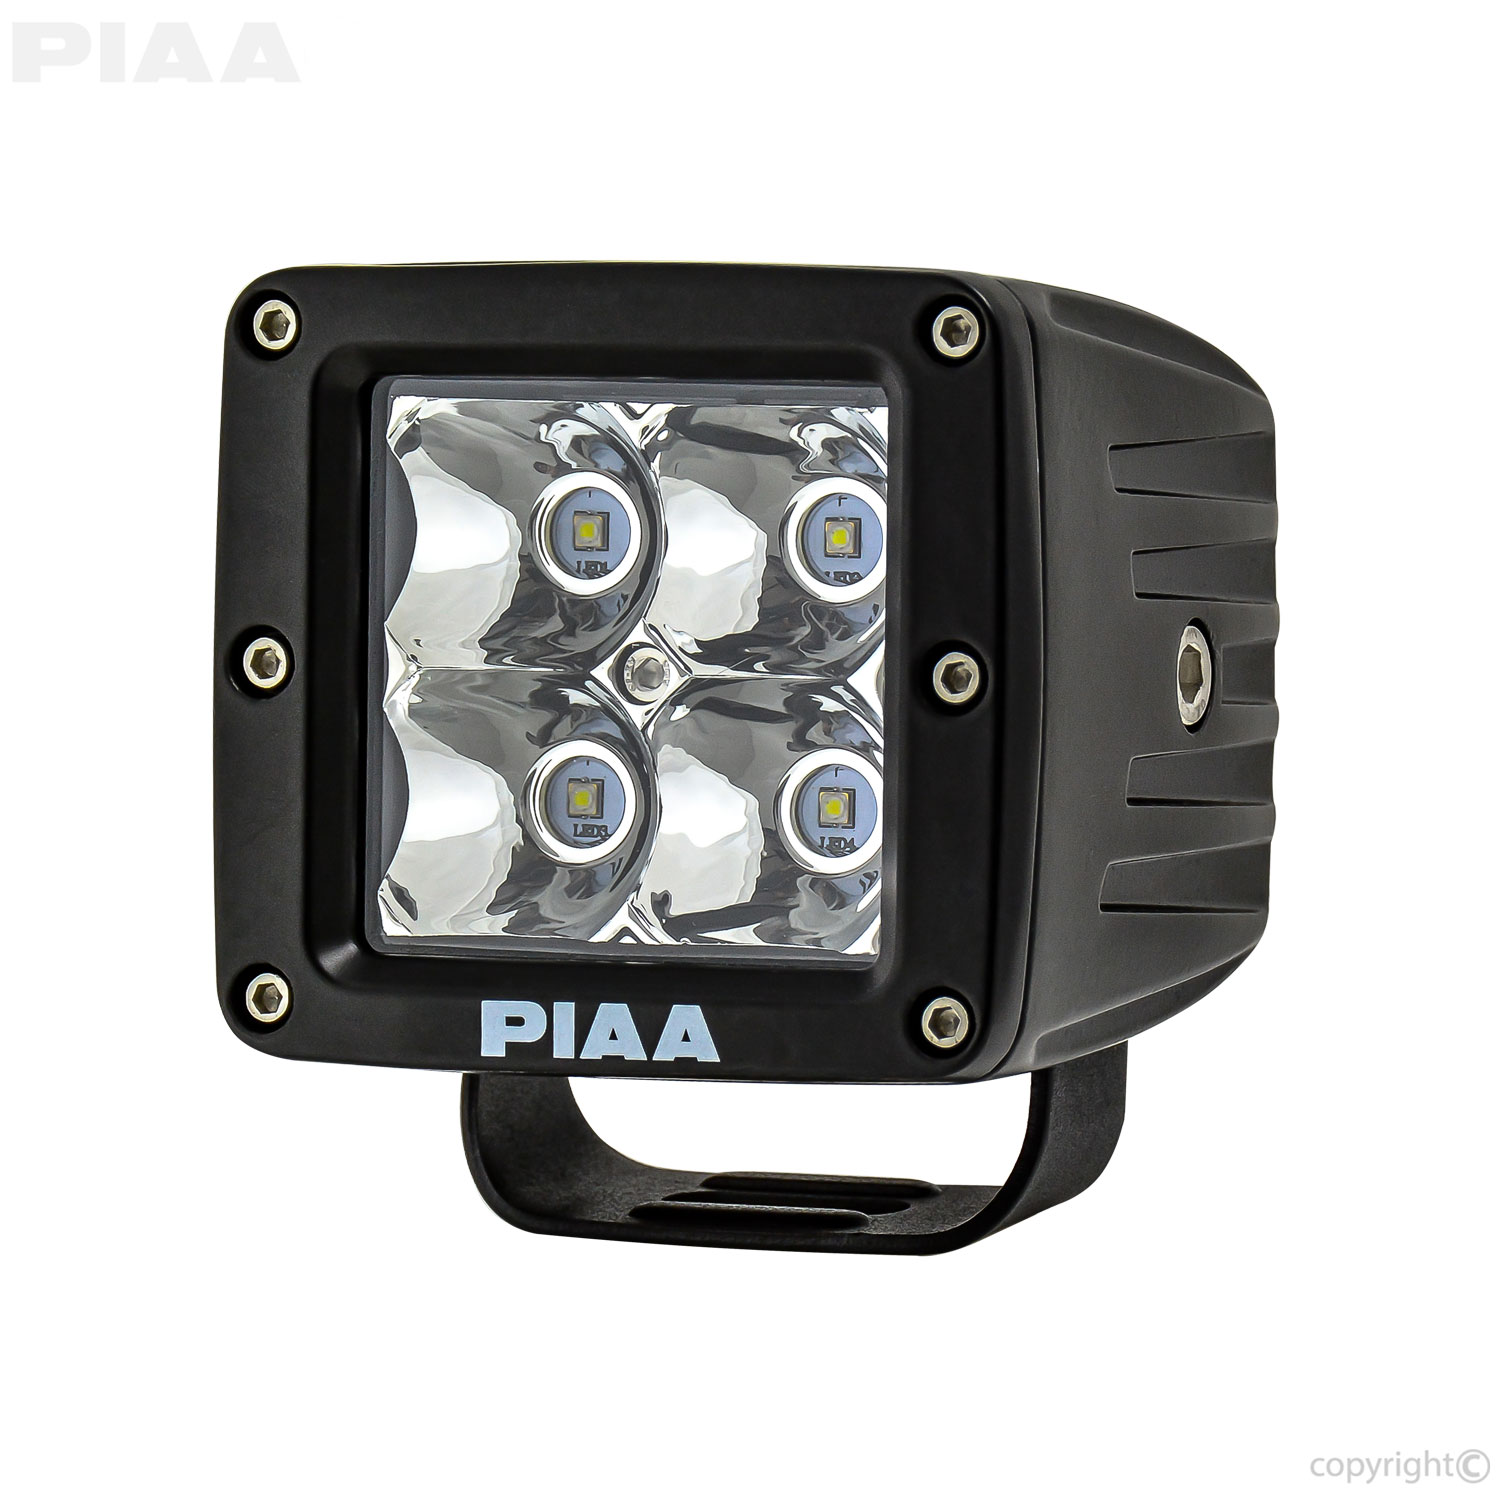 PIAA Quad Cube LED Spot Light